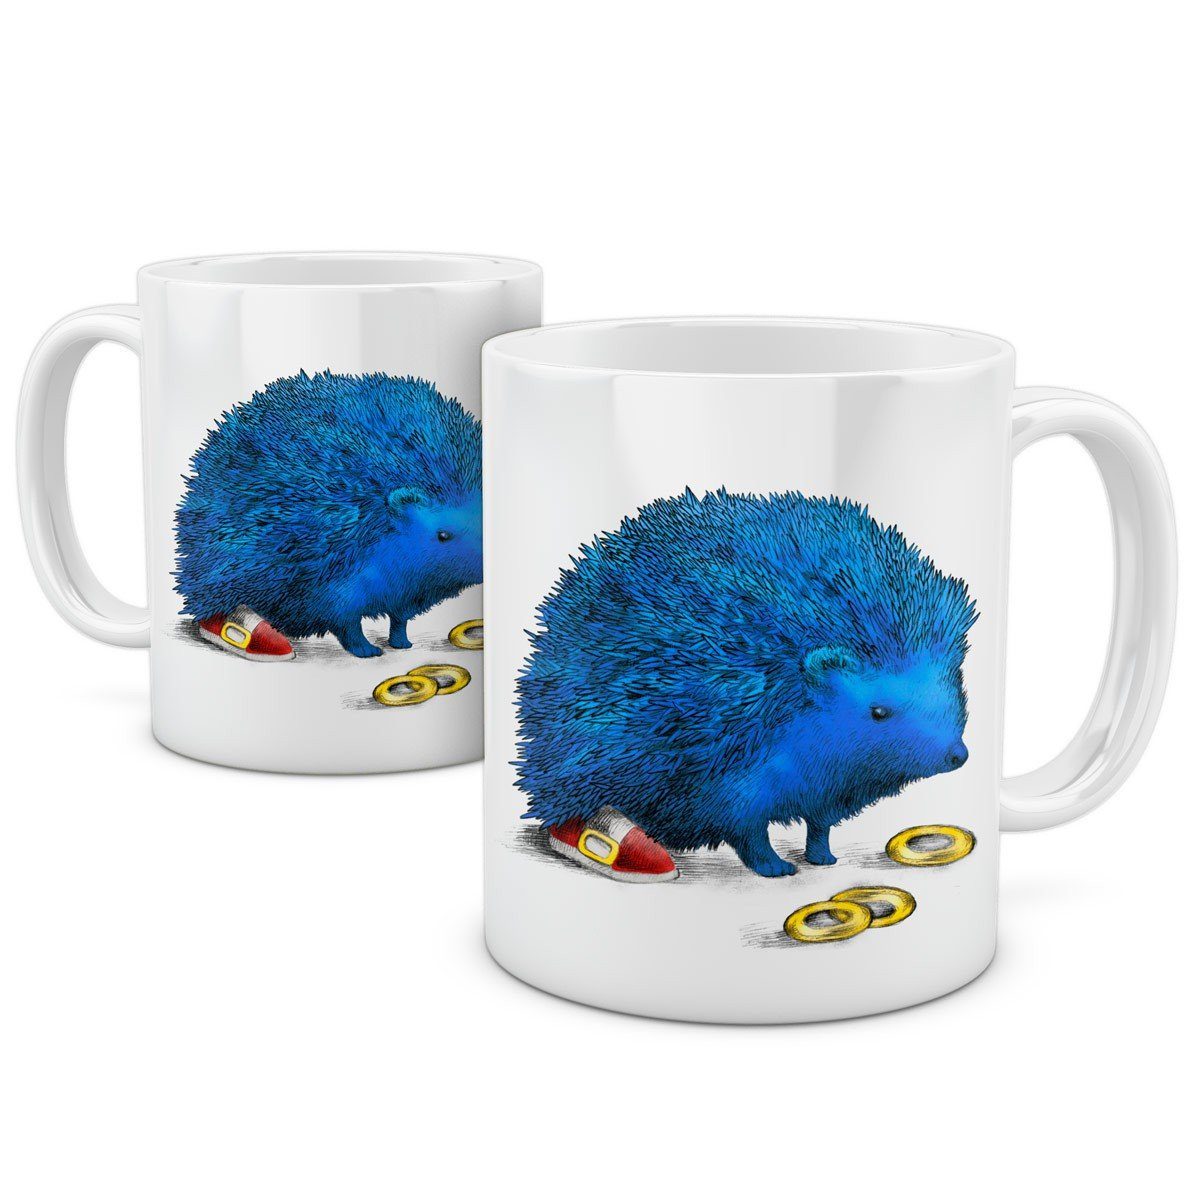 Keramik, jump'n'run Tasse, hedgehog style3 Igel Sonic Kaffeebecher Tasse blau